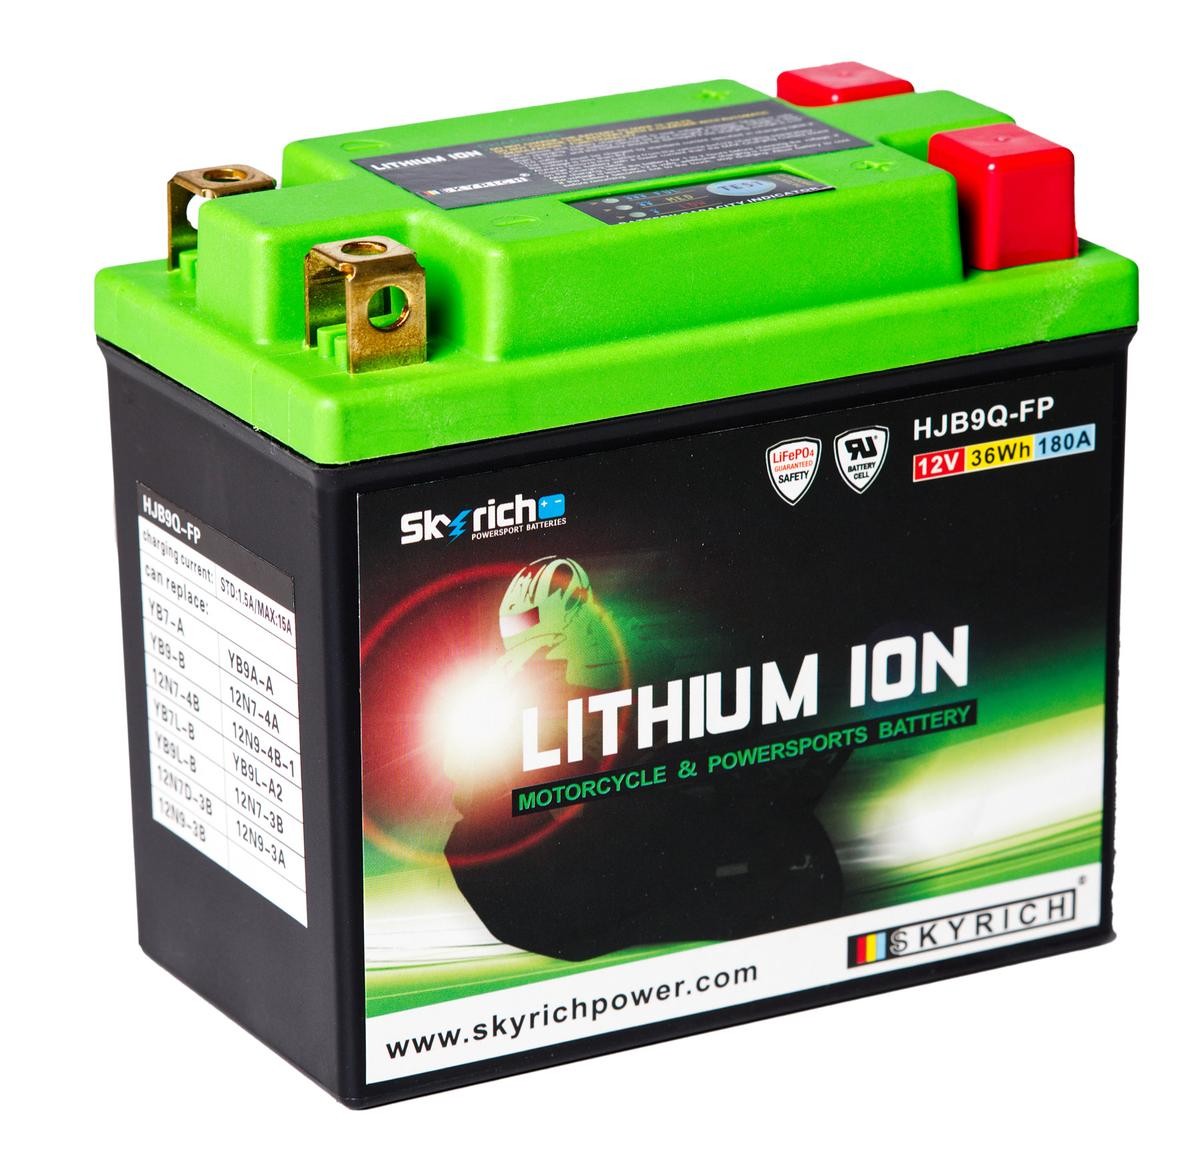 GILERA RUNNER Batterie 12V 3Ah 180A N Li-Ionen-Batterie SKYRICH LITHIUM ION HJB9Q-FP